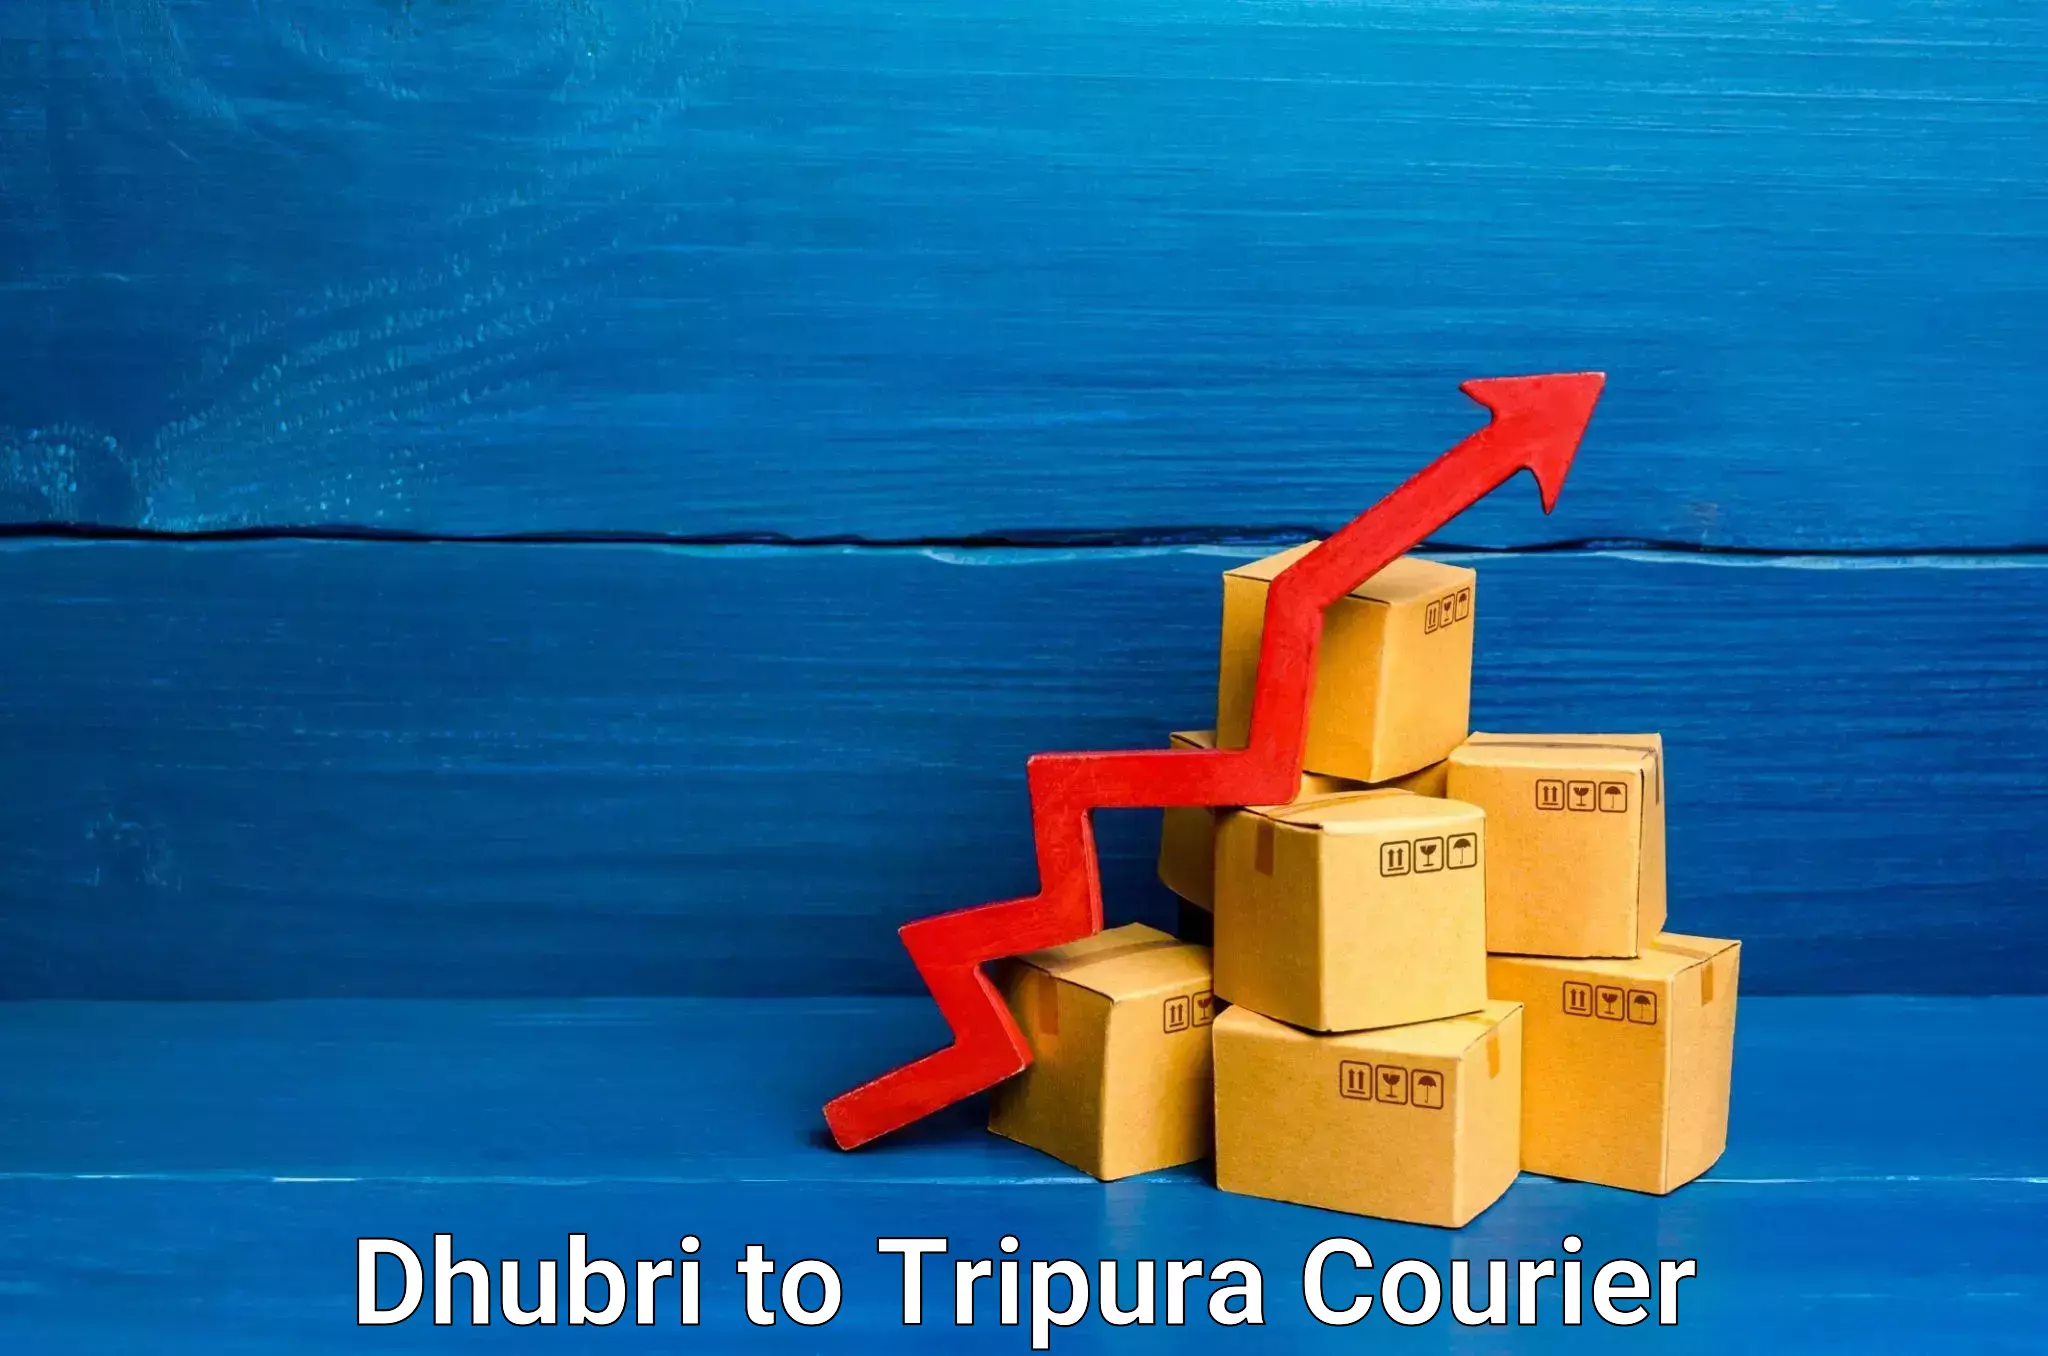 Quick dispatch service Dhubri to Agartala